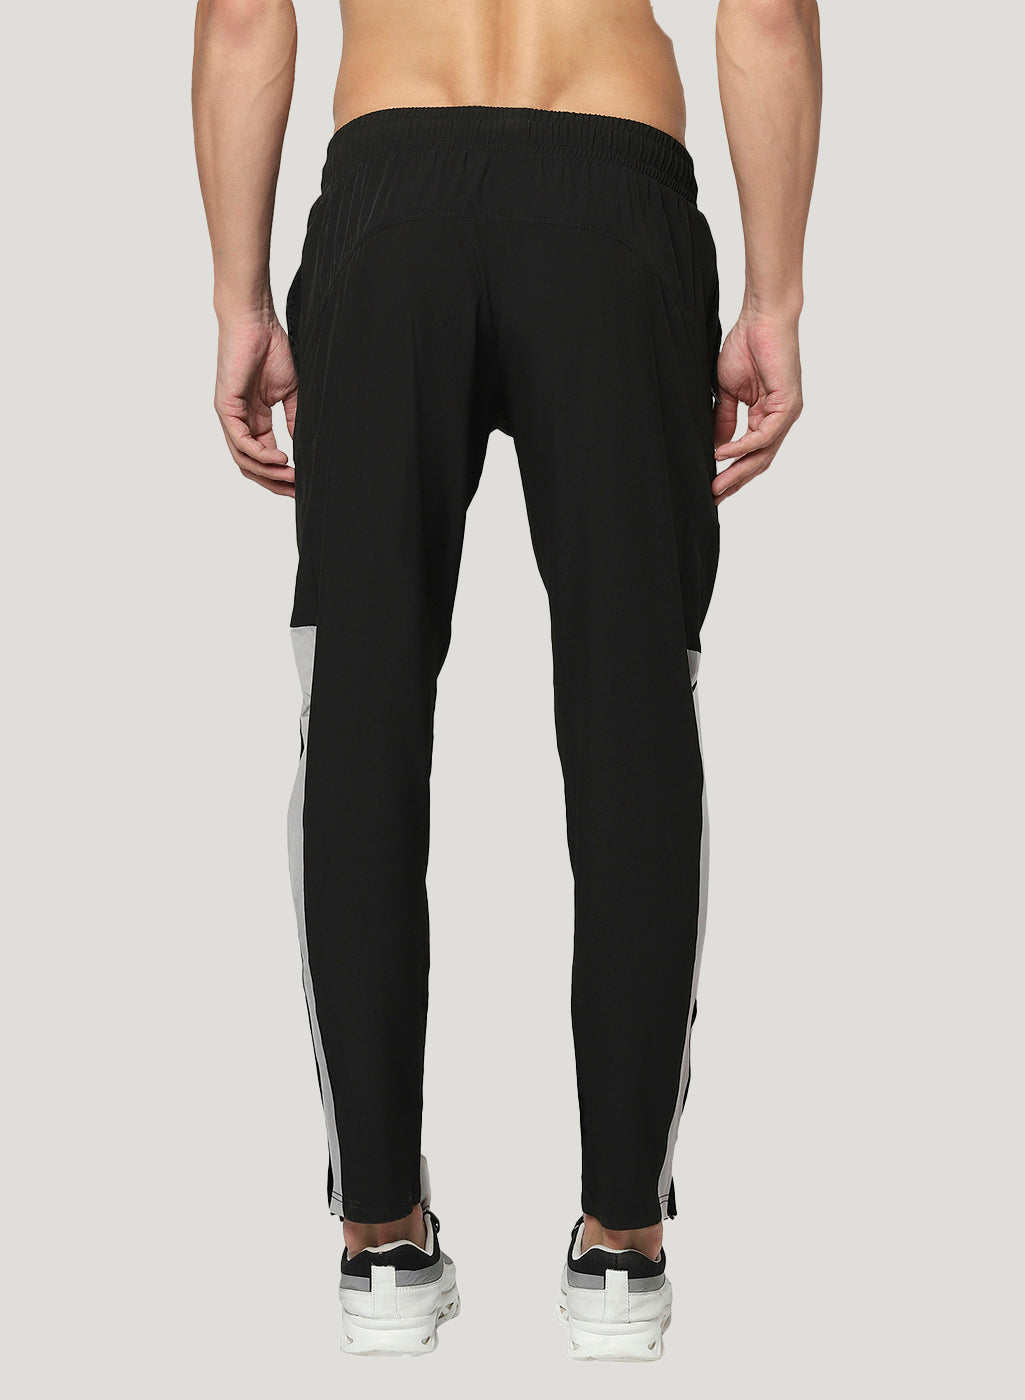 Adidas Classic Three Stripe Track Pants Ankle Zipper Pockets Black White Sz  M